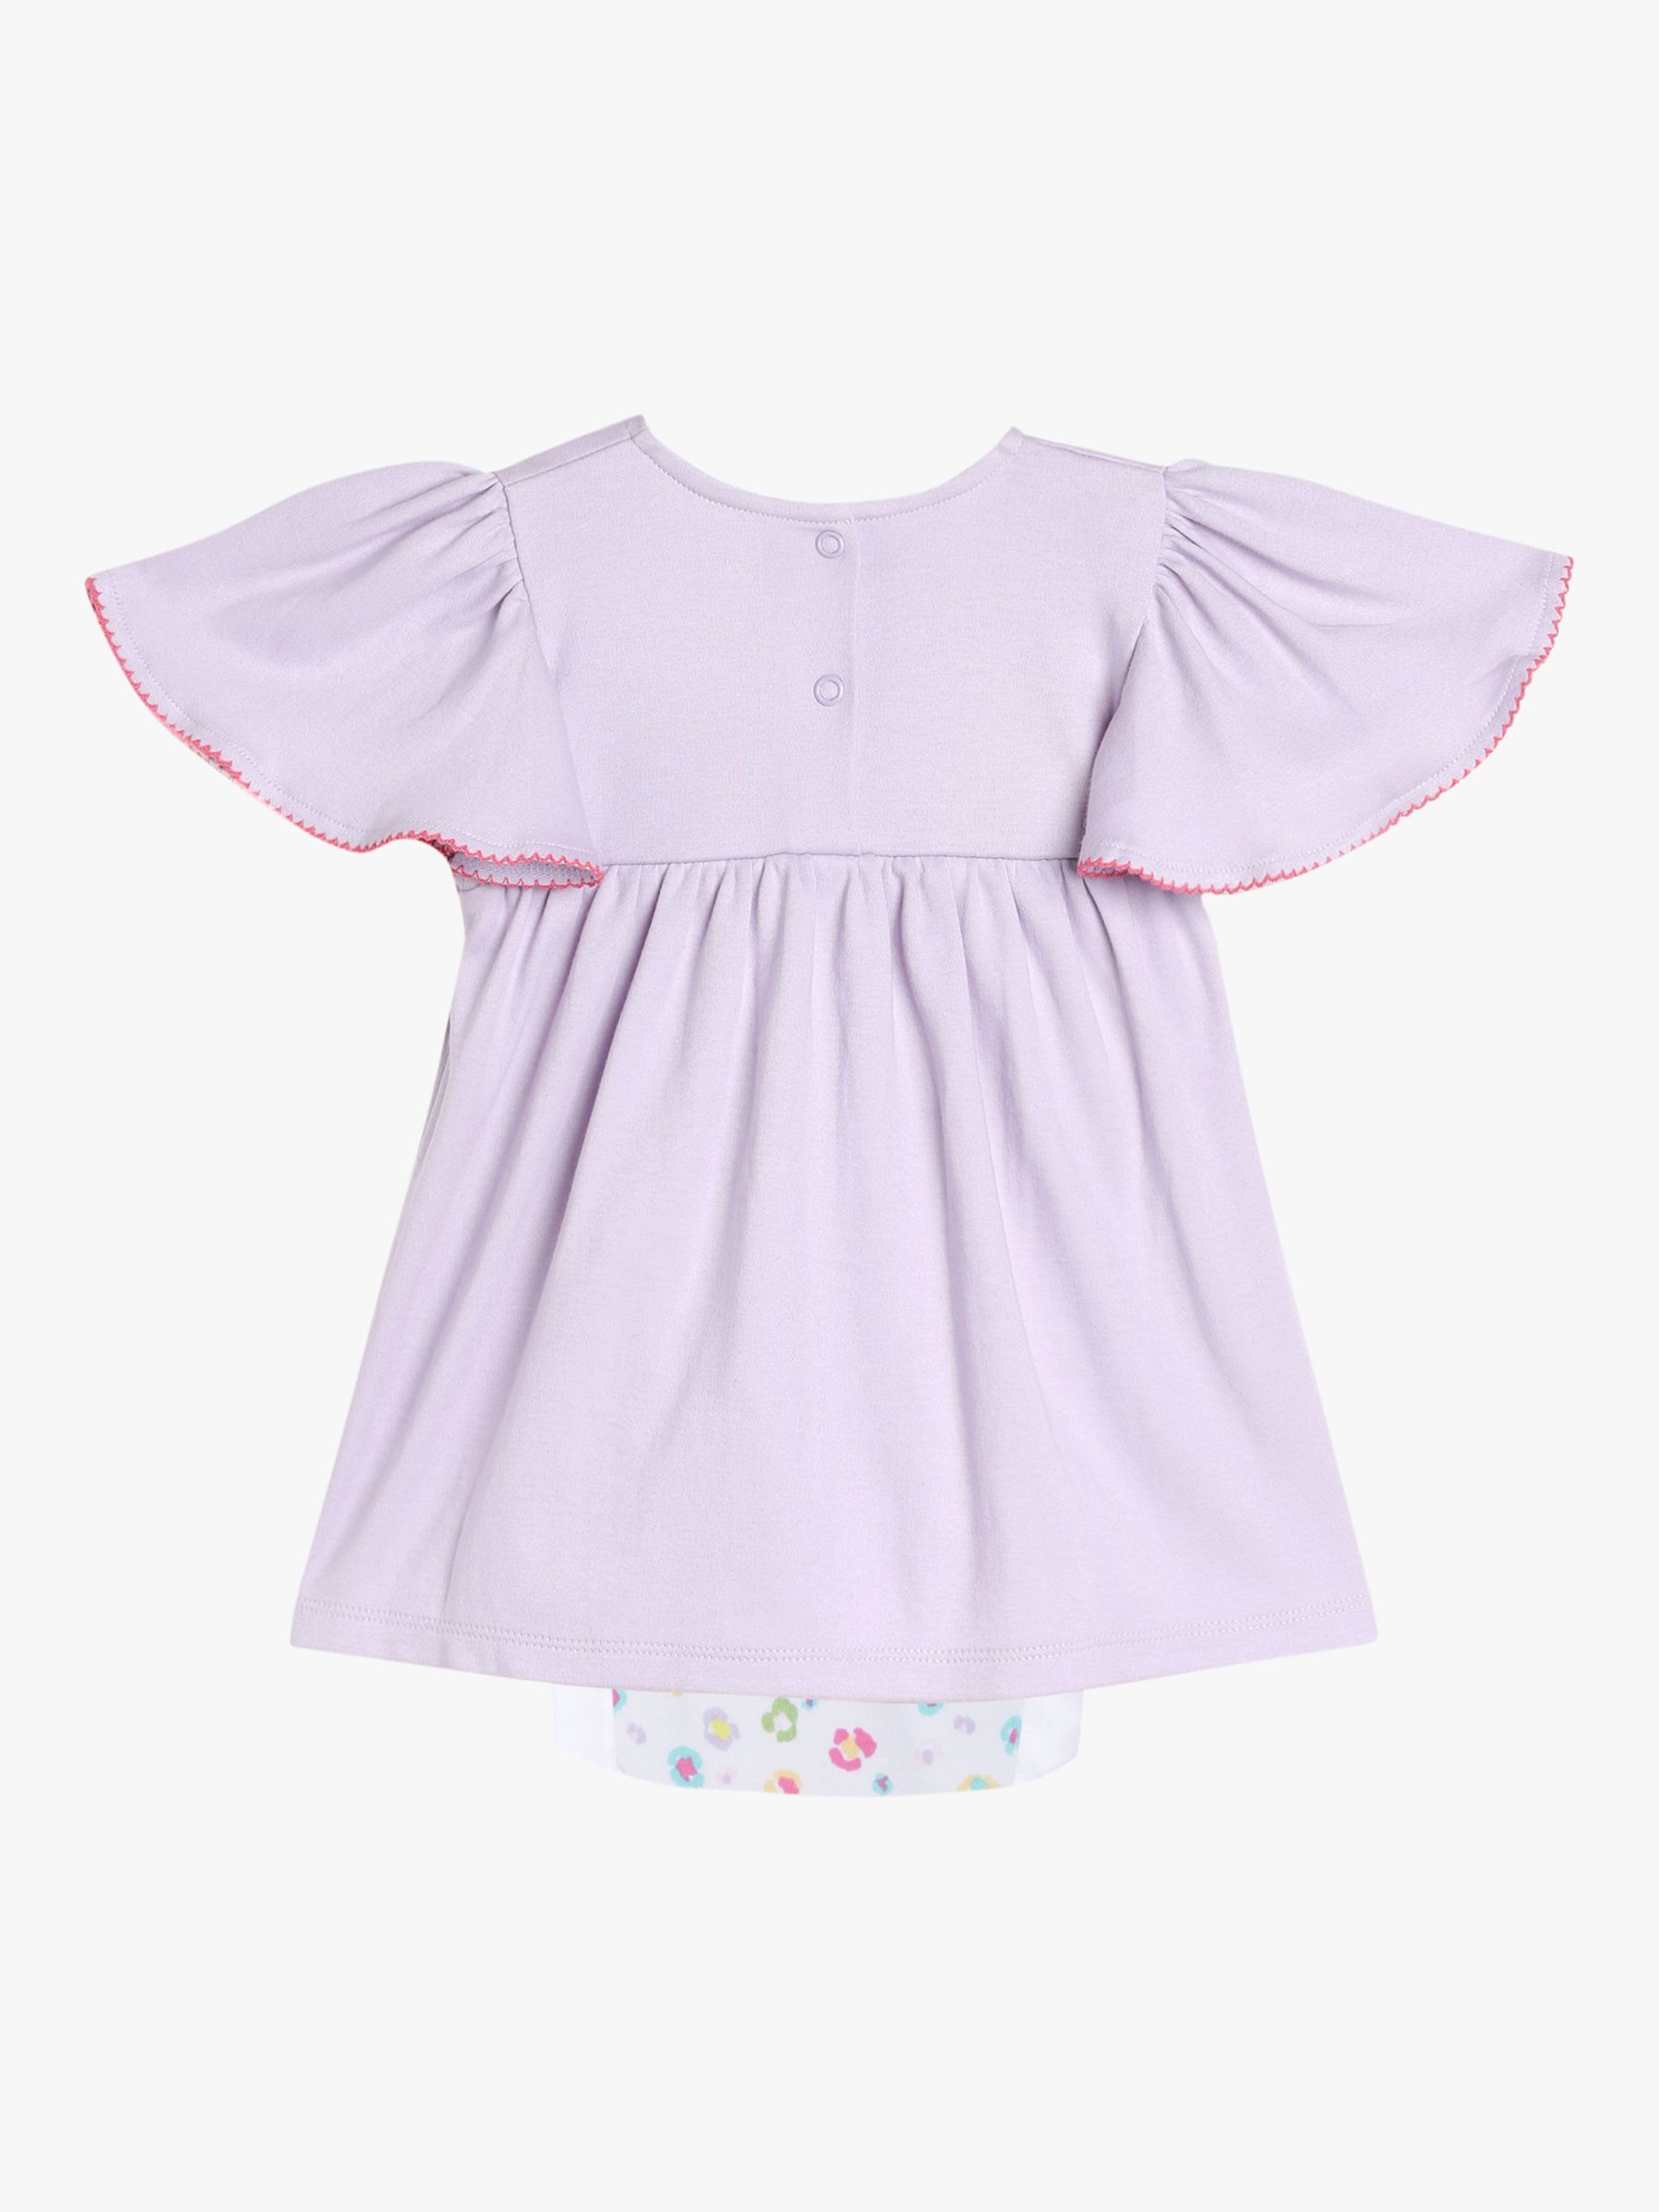 Mini Cuddles Baby Floral Embroidered Integral Bodysuit Dress, Purple Multi, 3-6 months